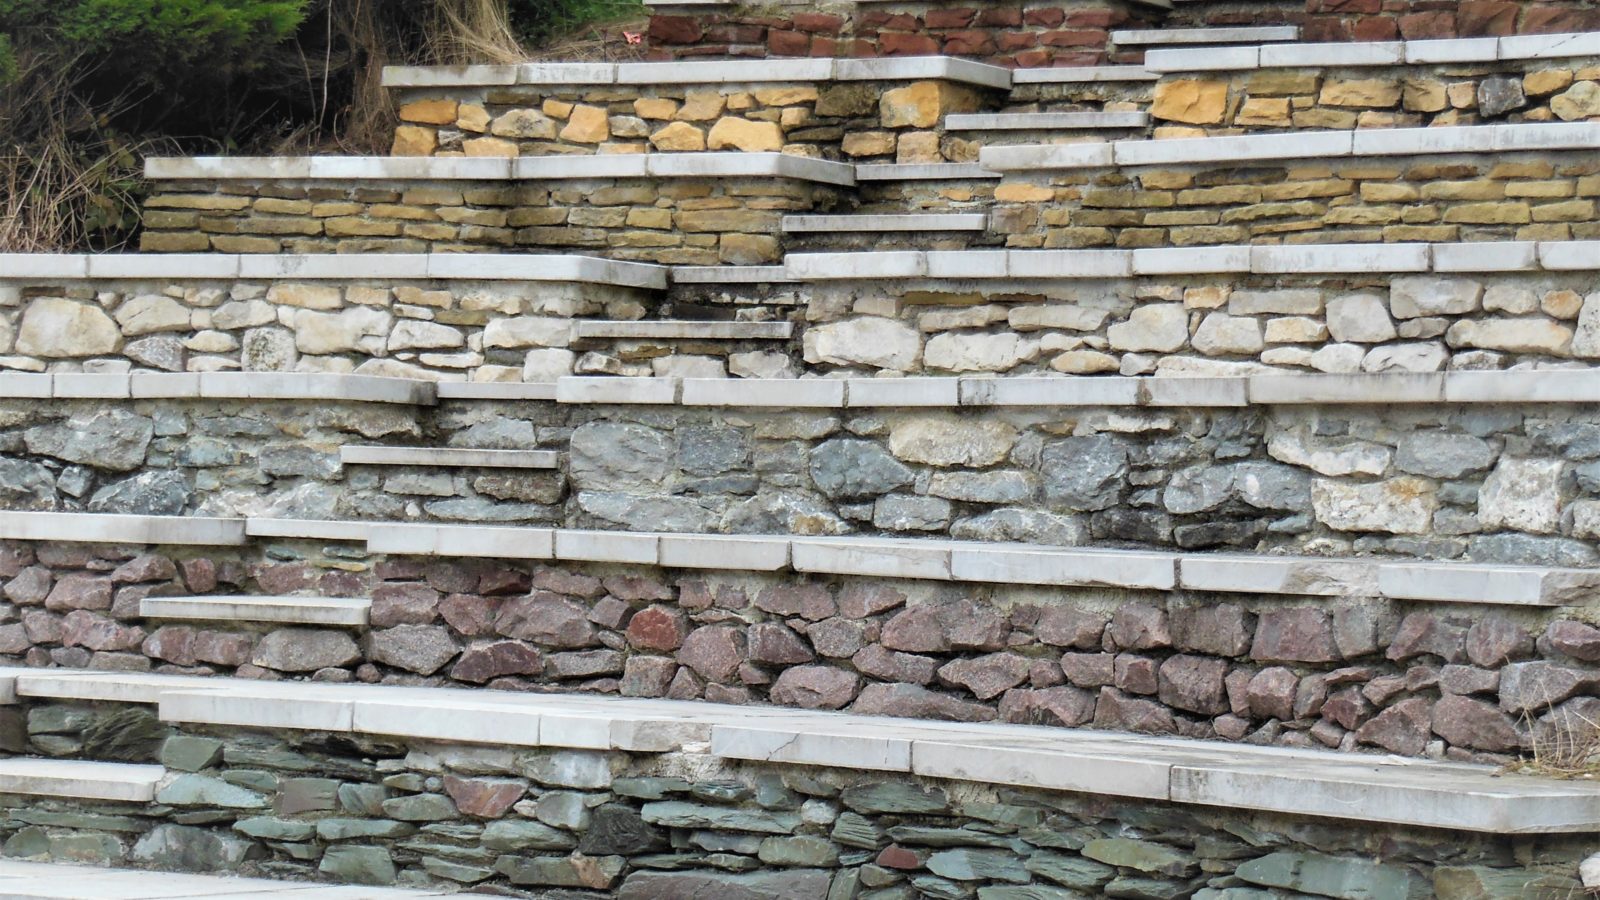 Building stone steps